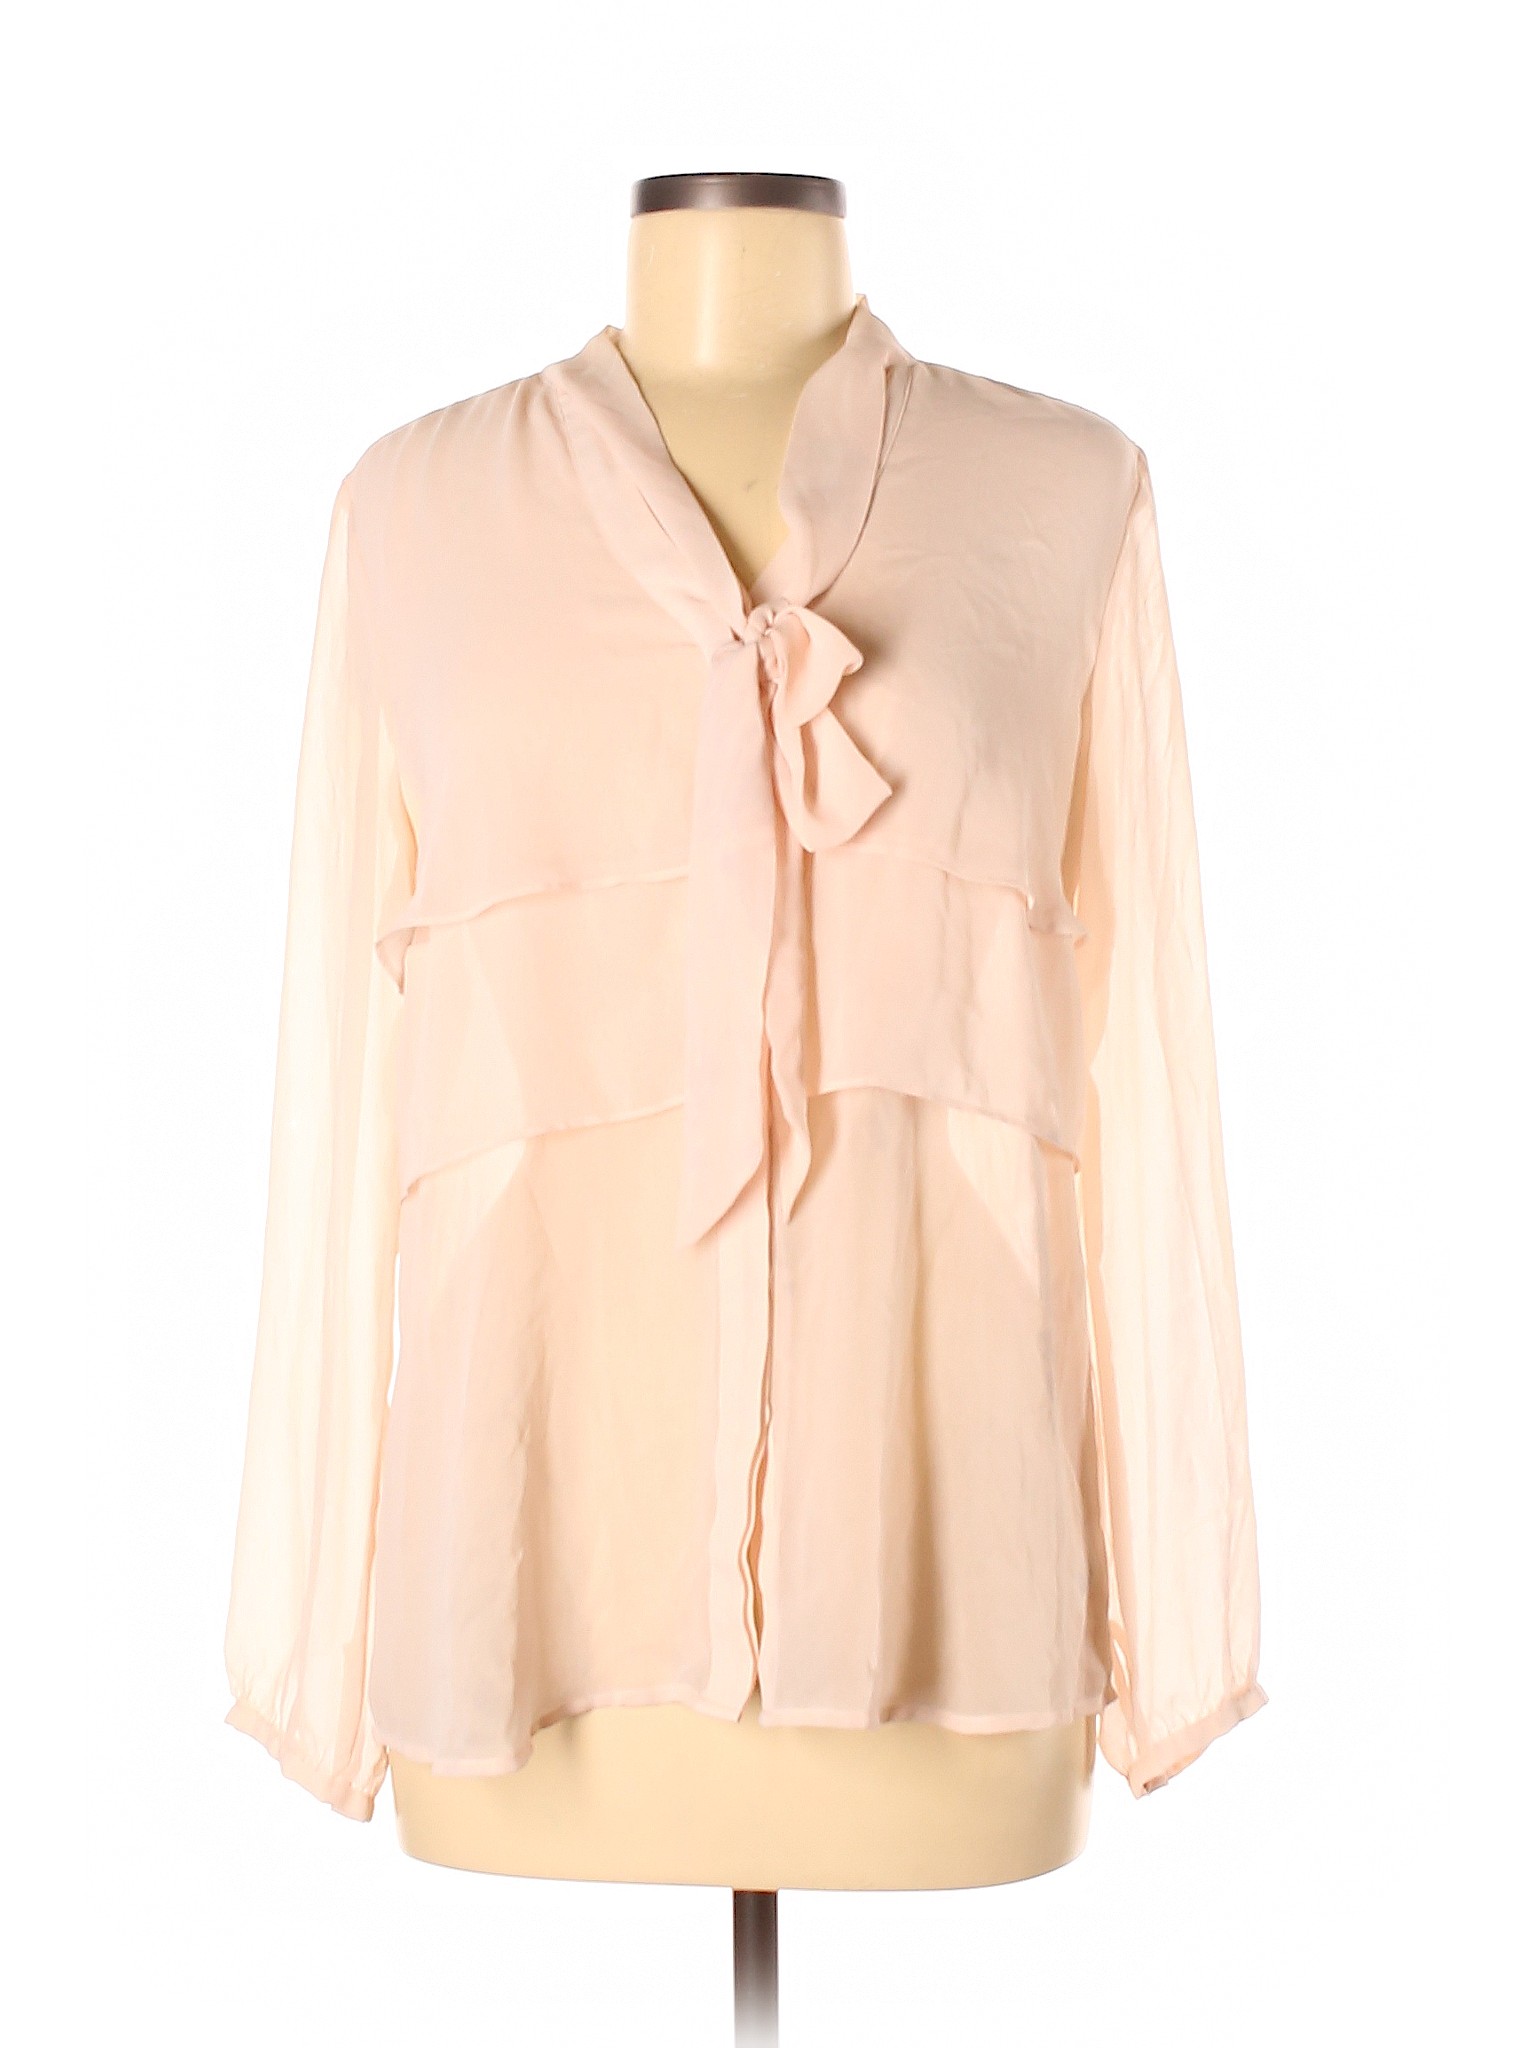 Express Women Brown Long Sleeve Blouse M | eBay